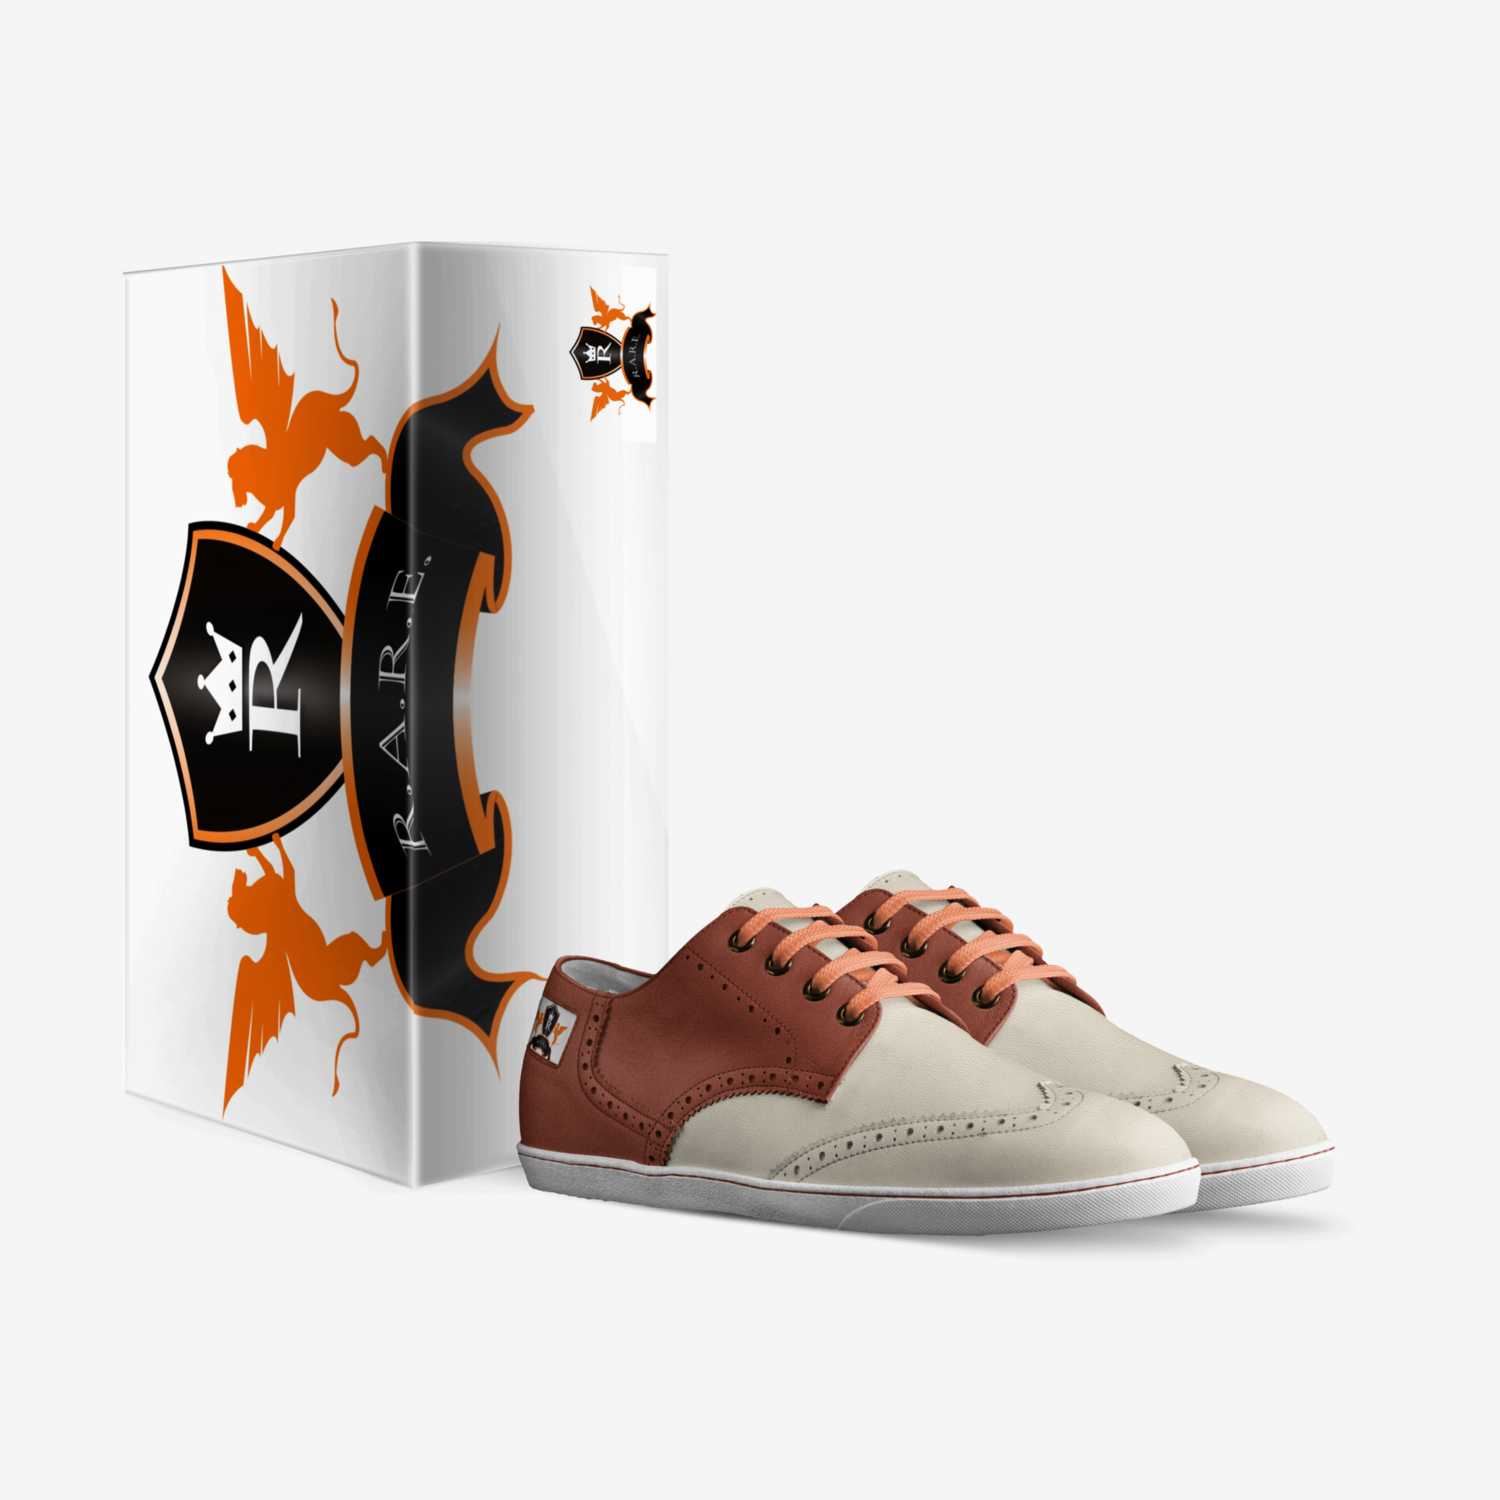 OAK custom made in Italy shoes by John A. Annan | Box view